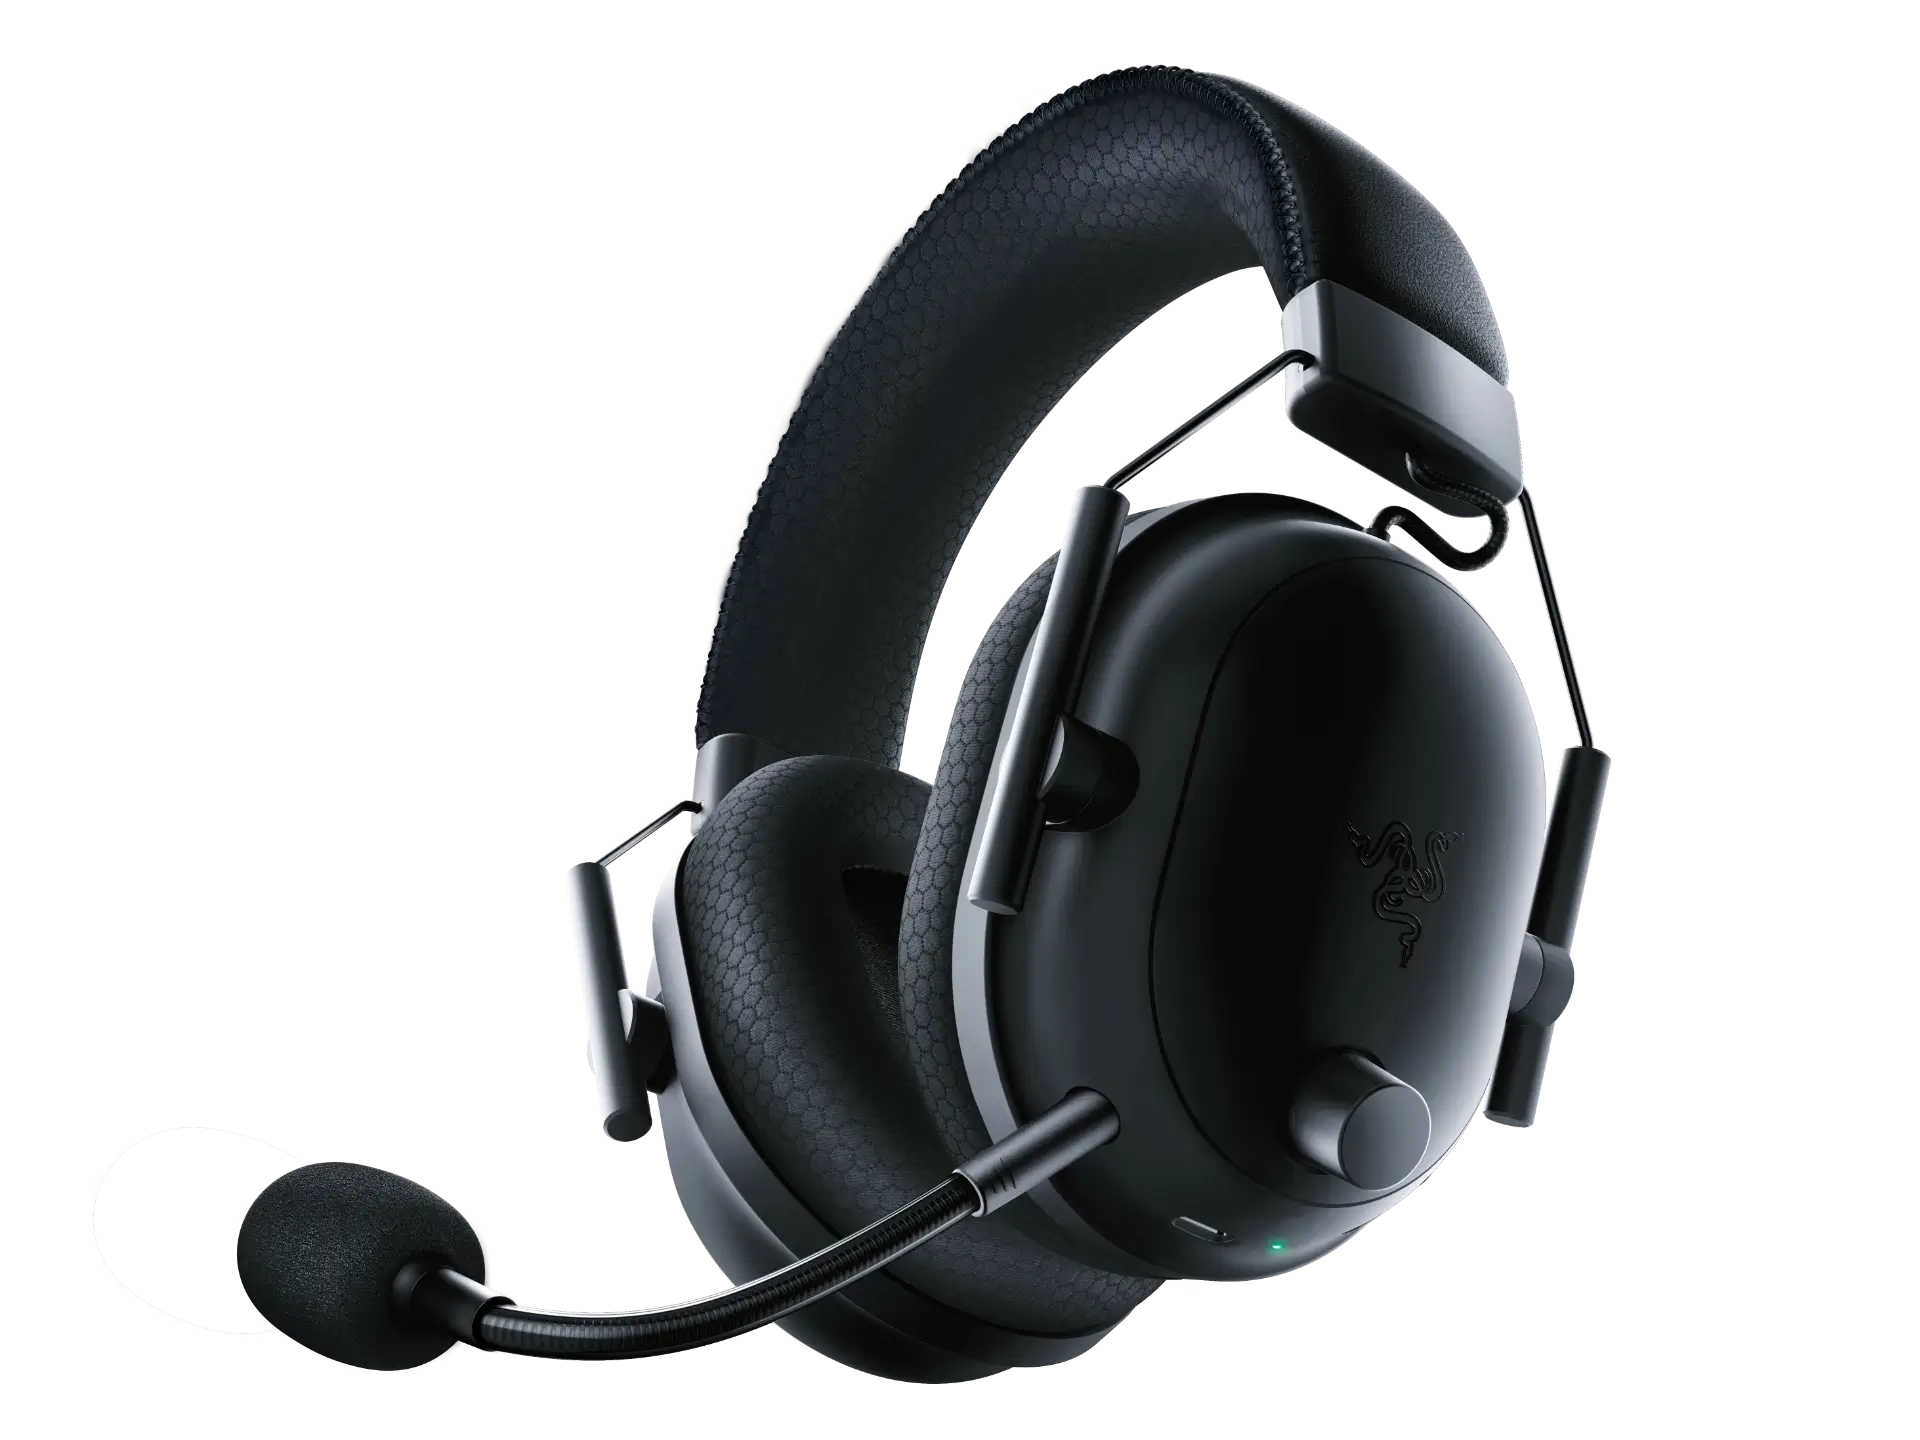 The Razer BlackShark V2 Pro wireless gaming headset showcasing its sleek black design and plush memory foam ear cushions for extended comfort during gameplay.